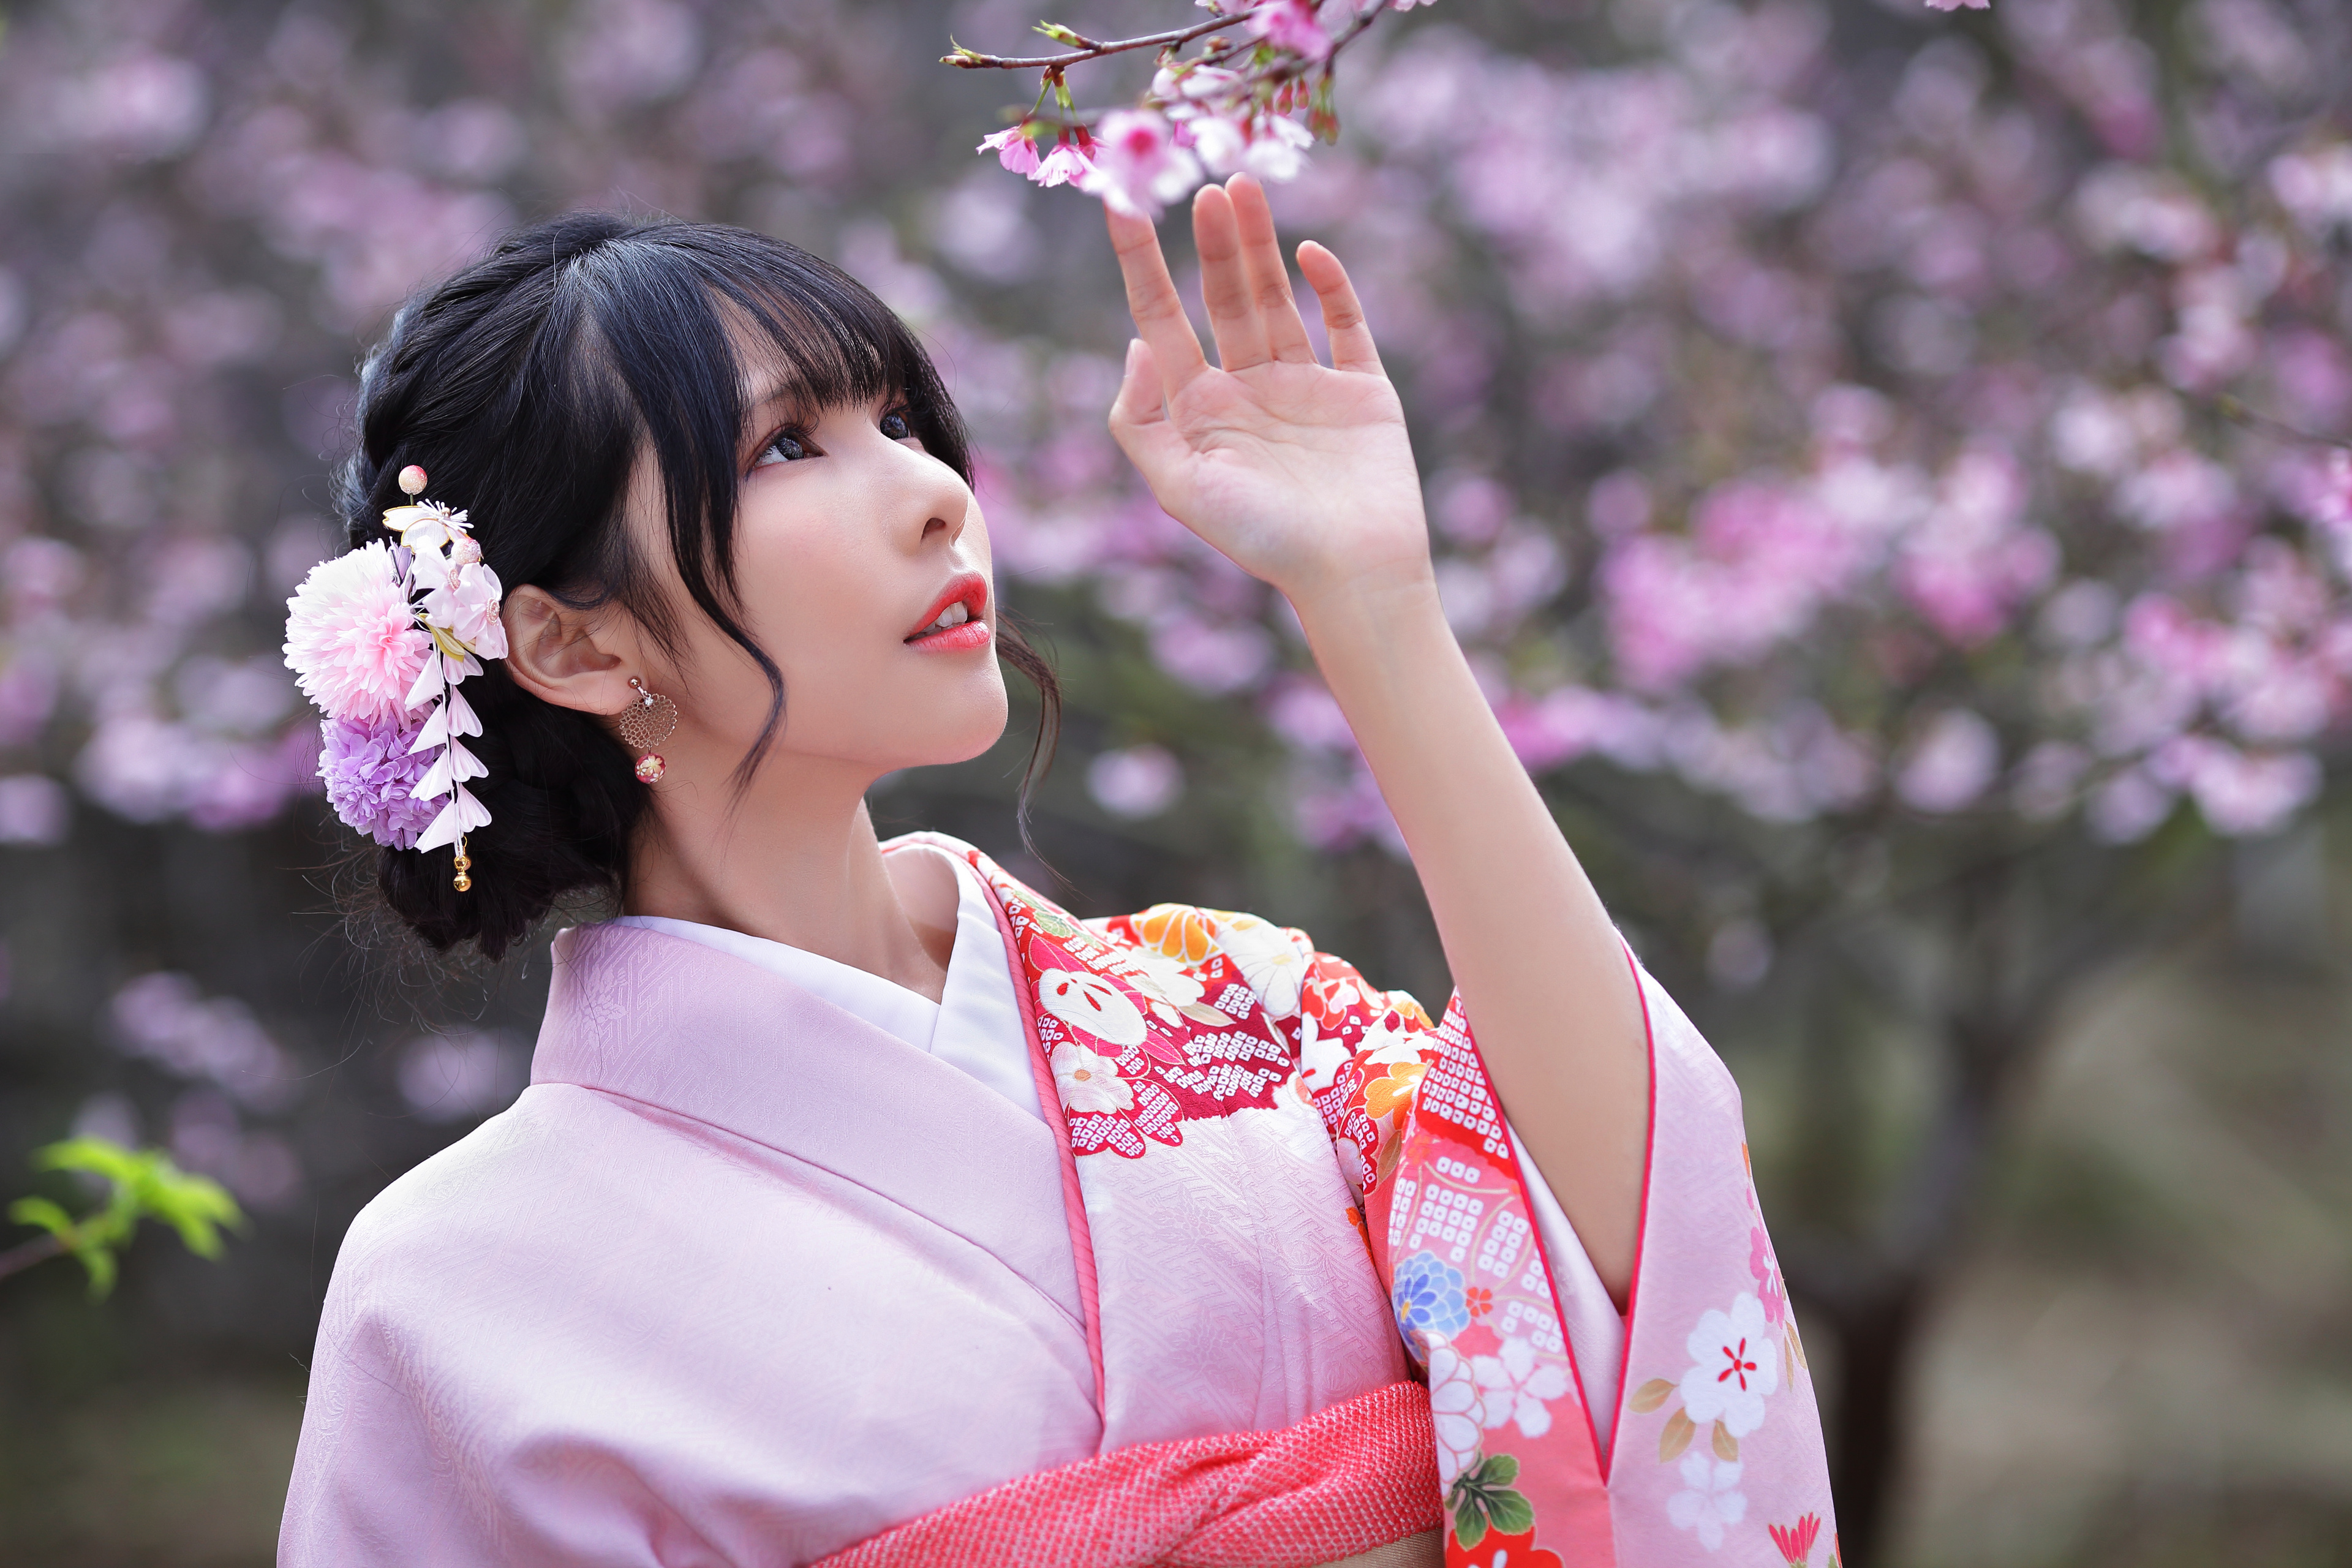 Asian Model Women Black Hair Hair Knot Hair Ornament Earring Depth Of Field Trees Cherry Blossom Tra 3840x2560